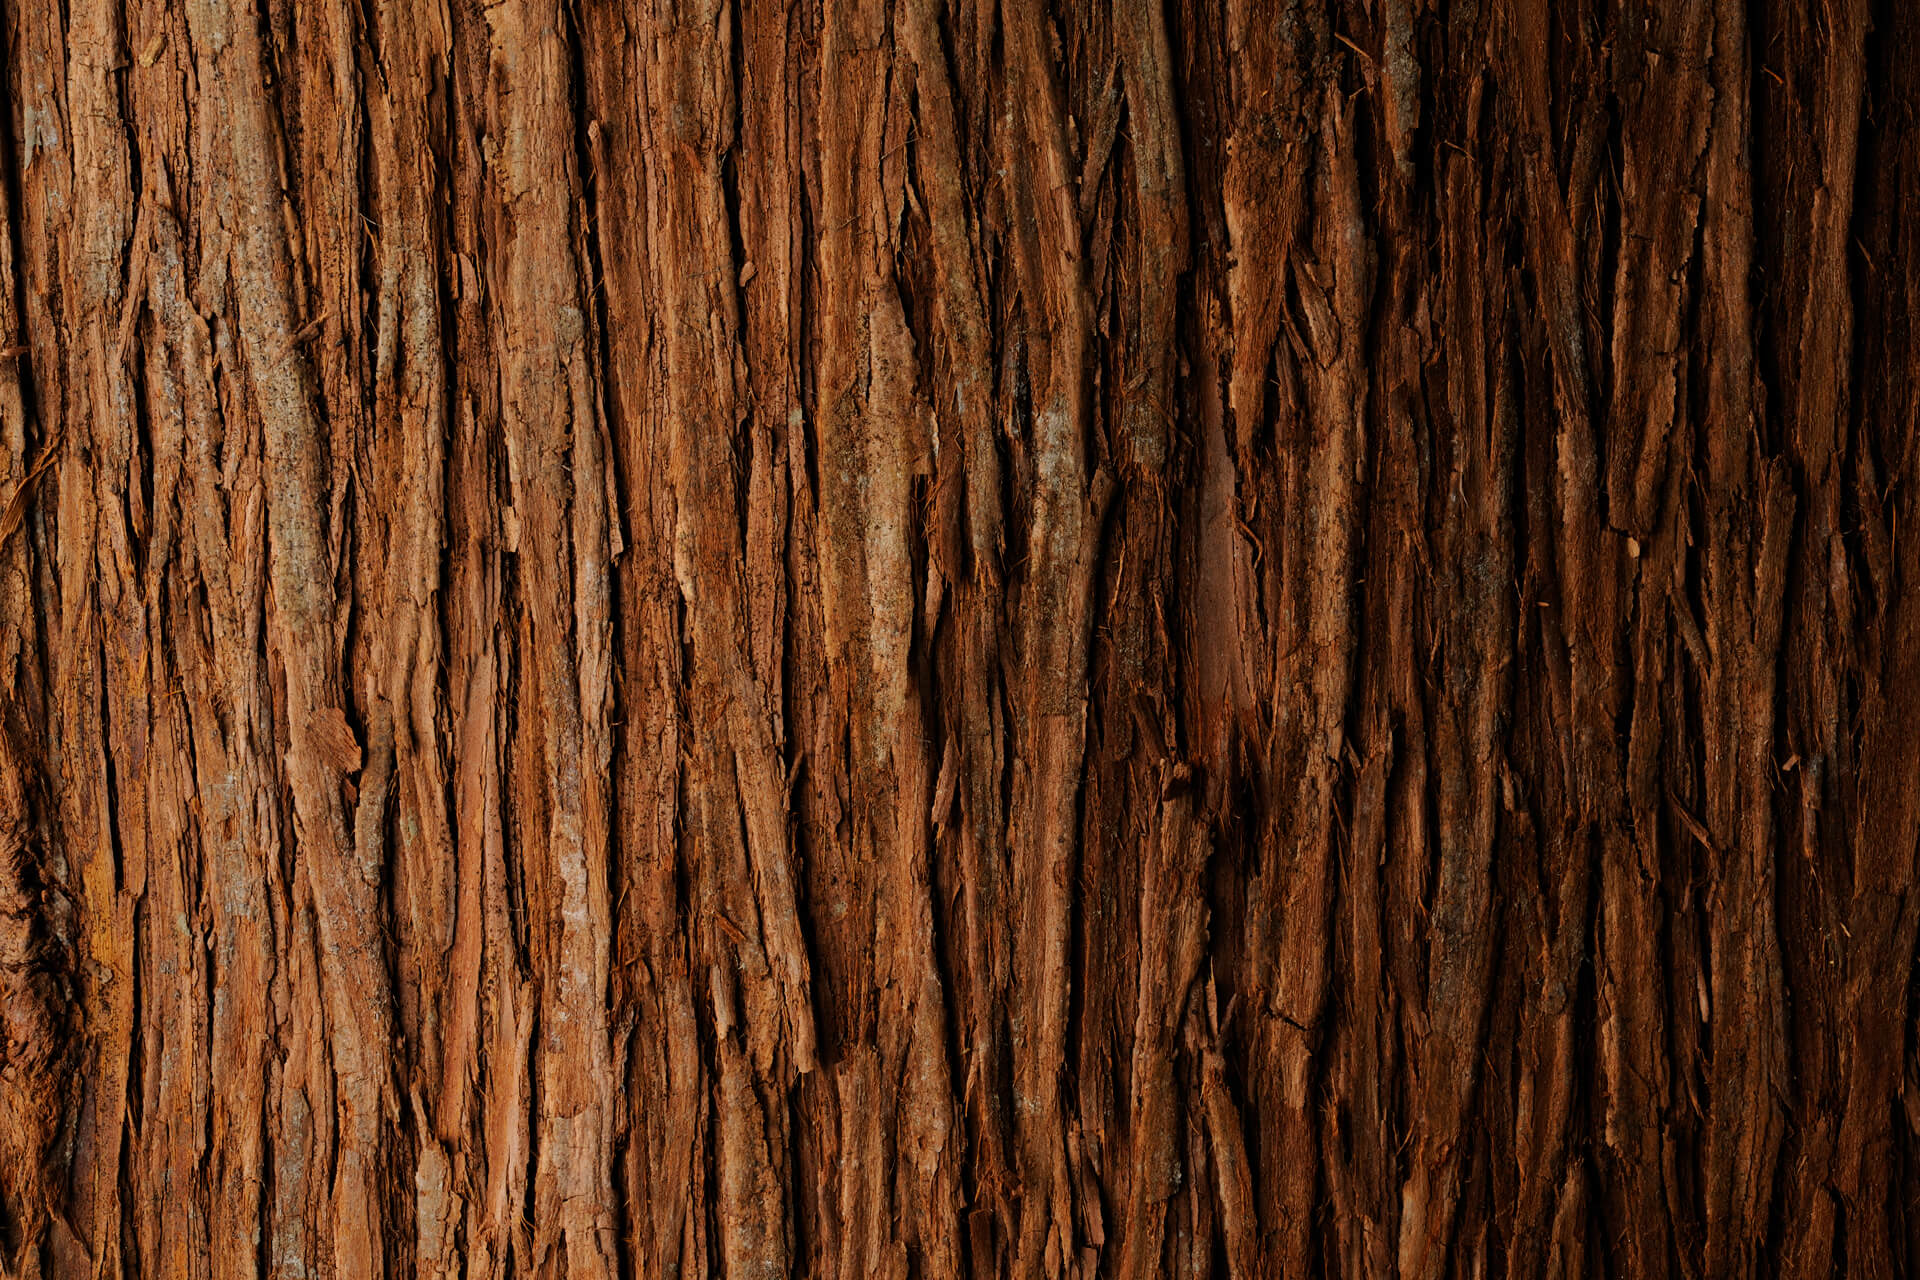 A close up shot of tree bark.